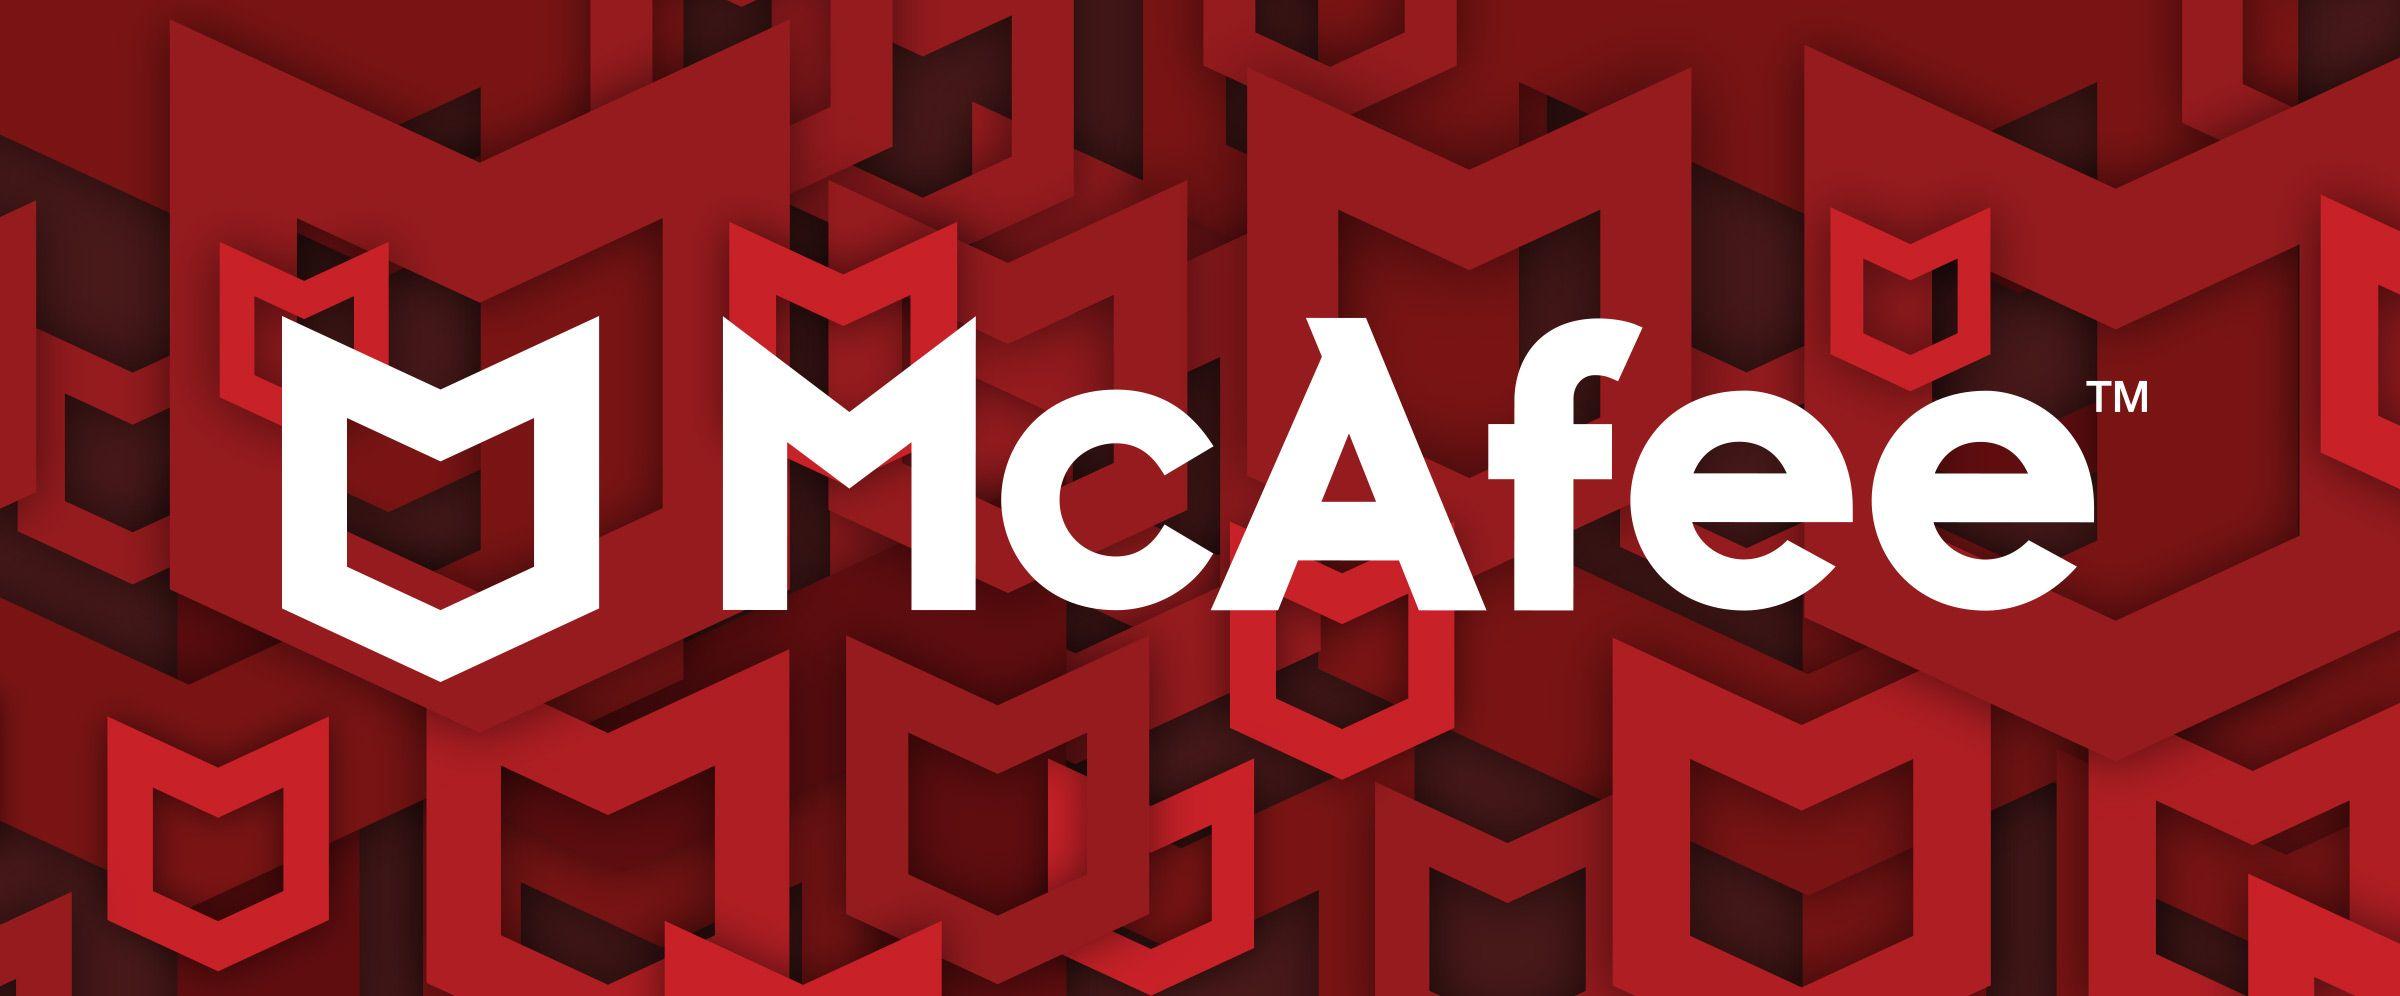 McAfee Logo - McAfee wins a Transform Award. - Solid Branding